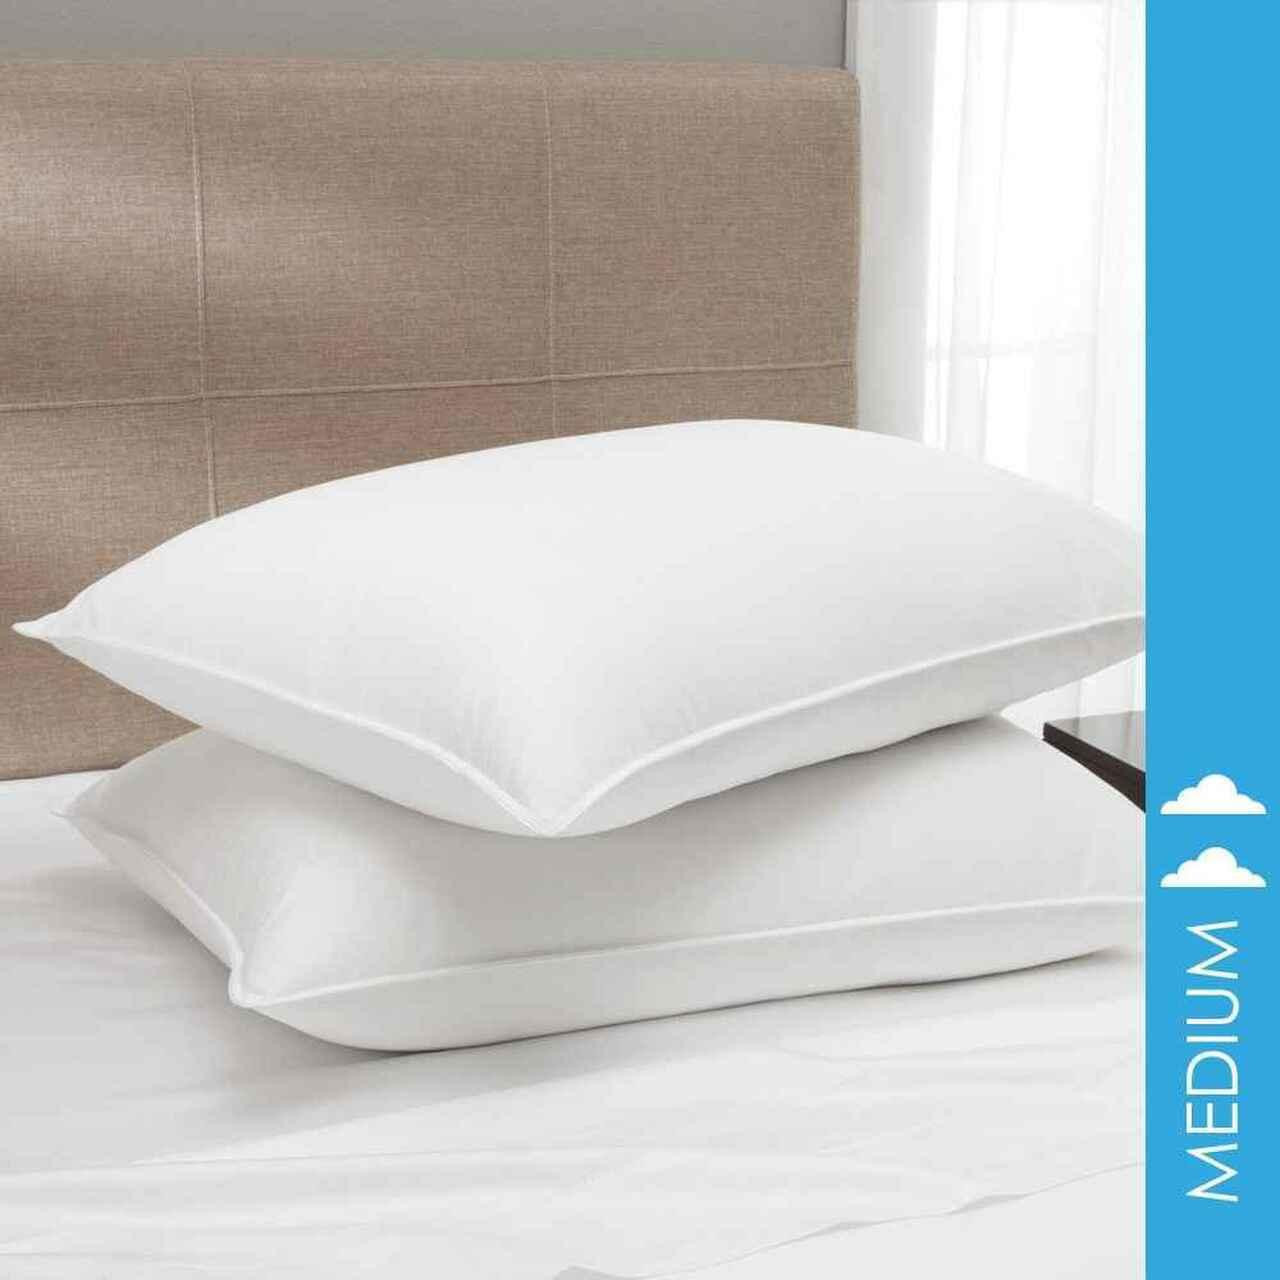 DownLite Bedding DownLite Pillows or Medium Density White Goose Down